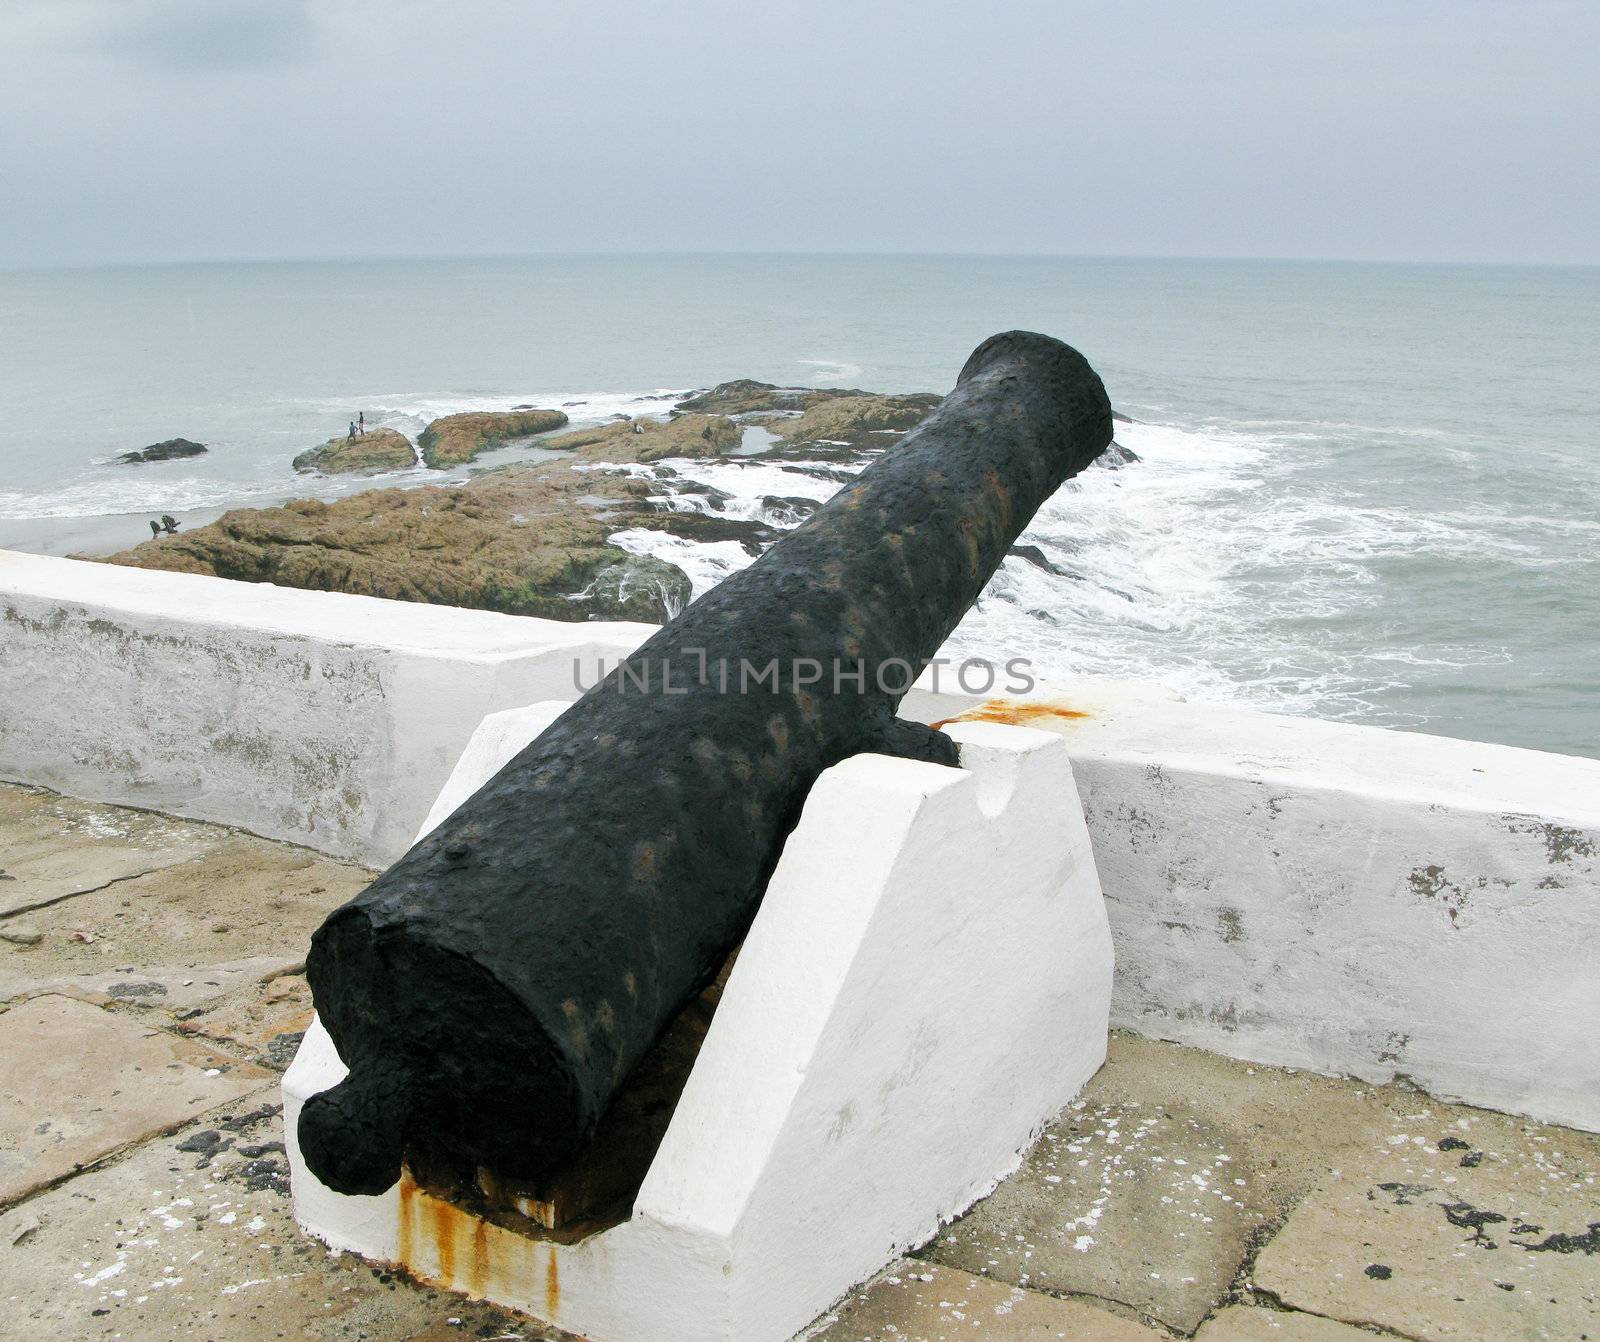 Elmina castle rusty gun overlooking ocean by steheap